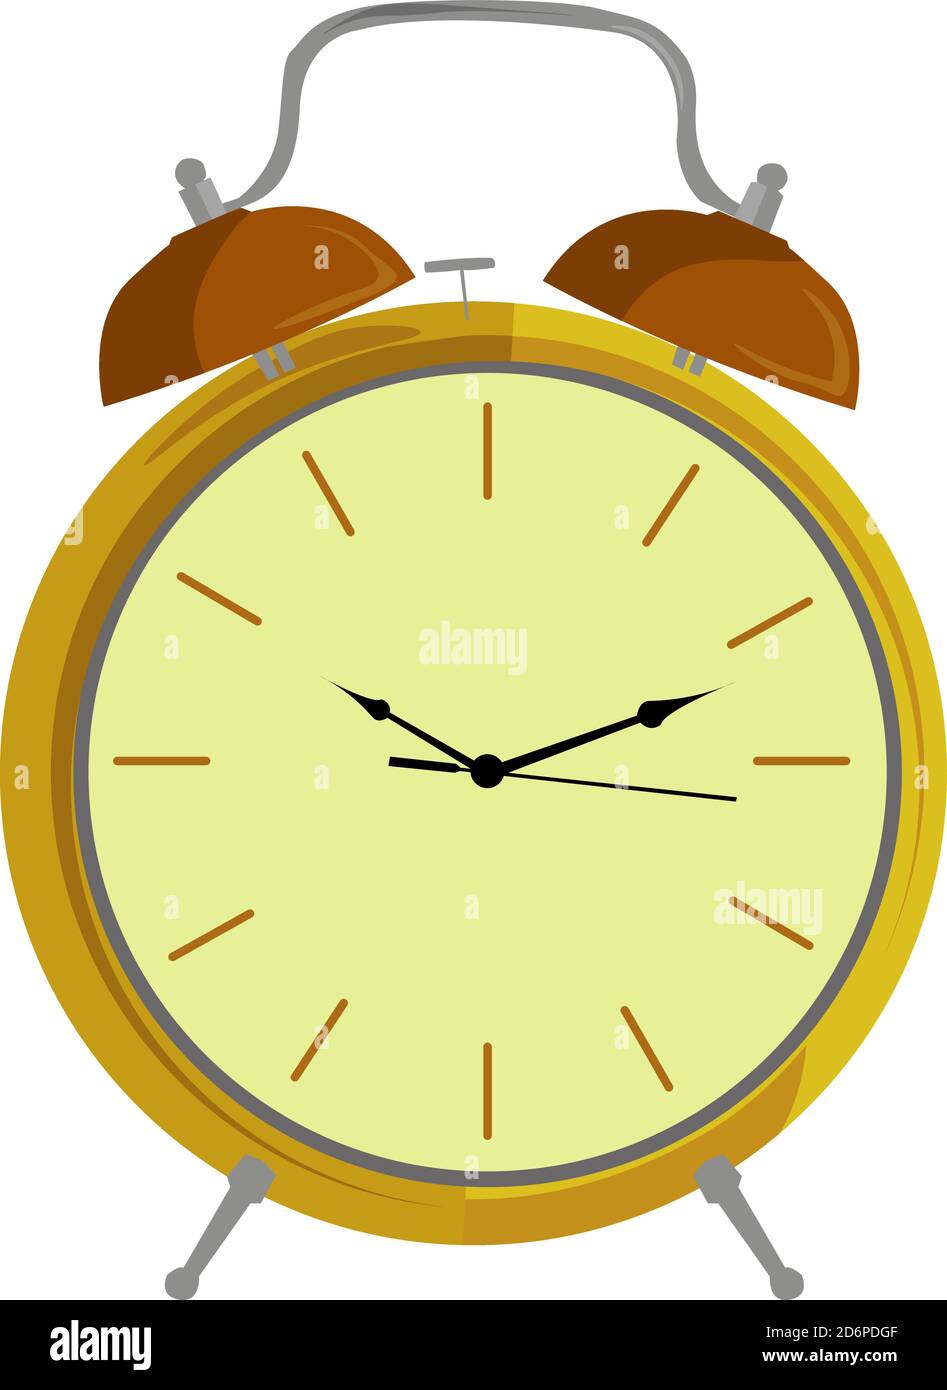 Alarm clock, illustration, vector on white background Stock Vector